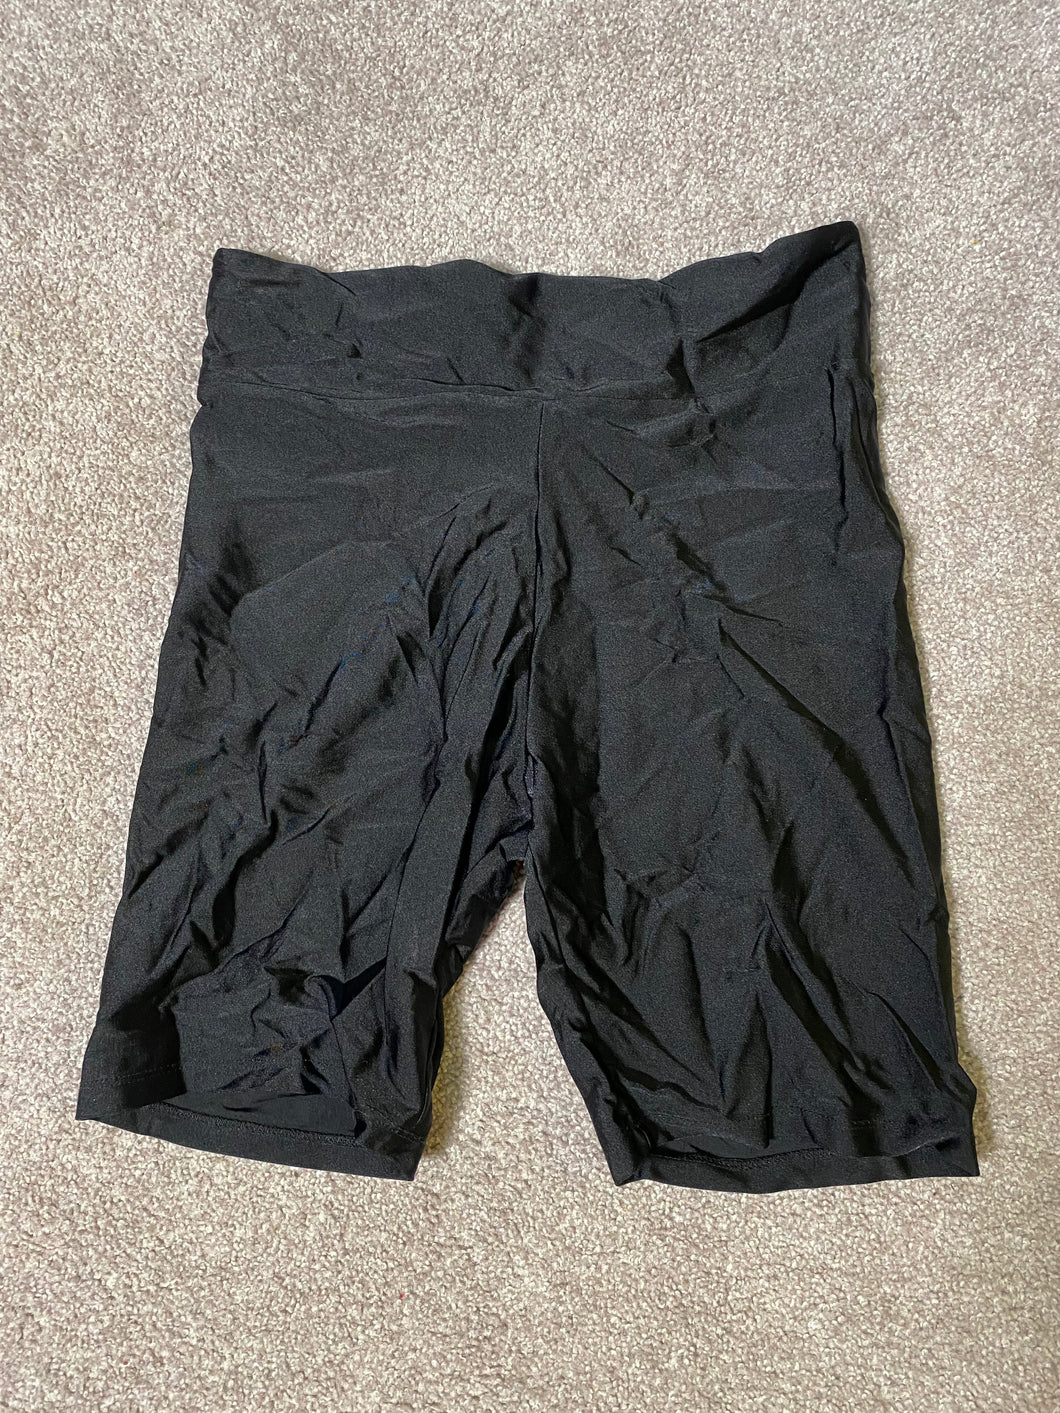 Biker Shorts - Large